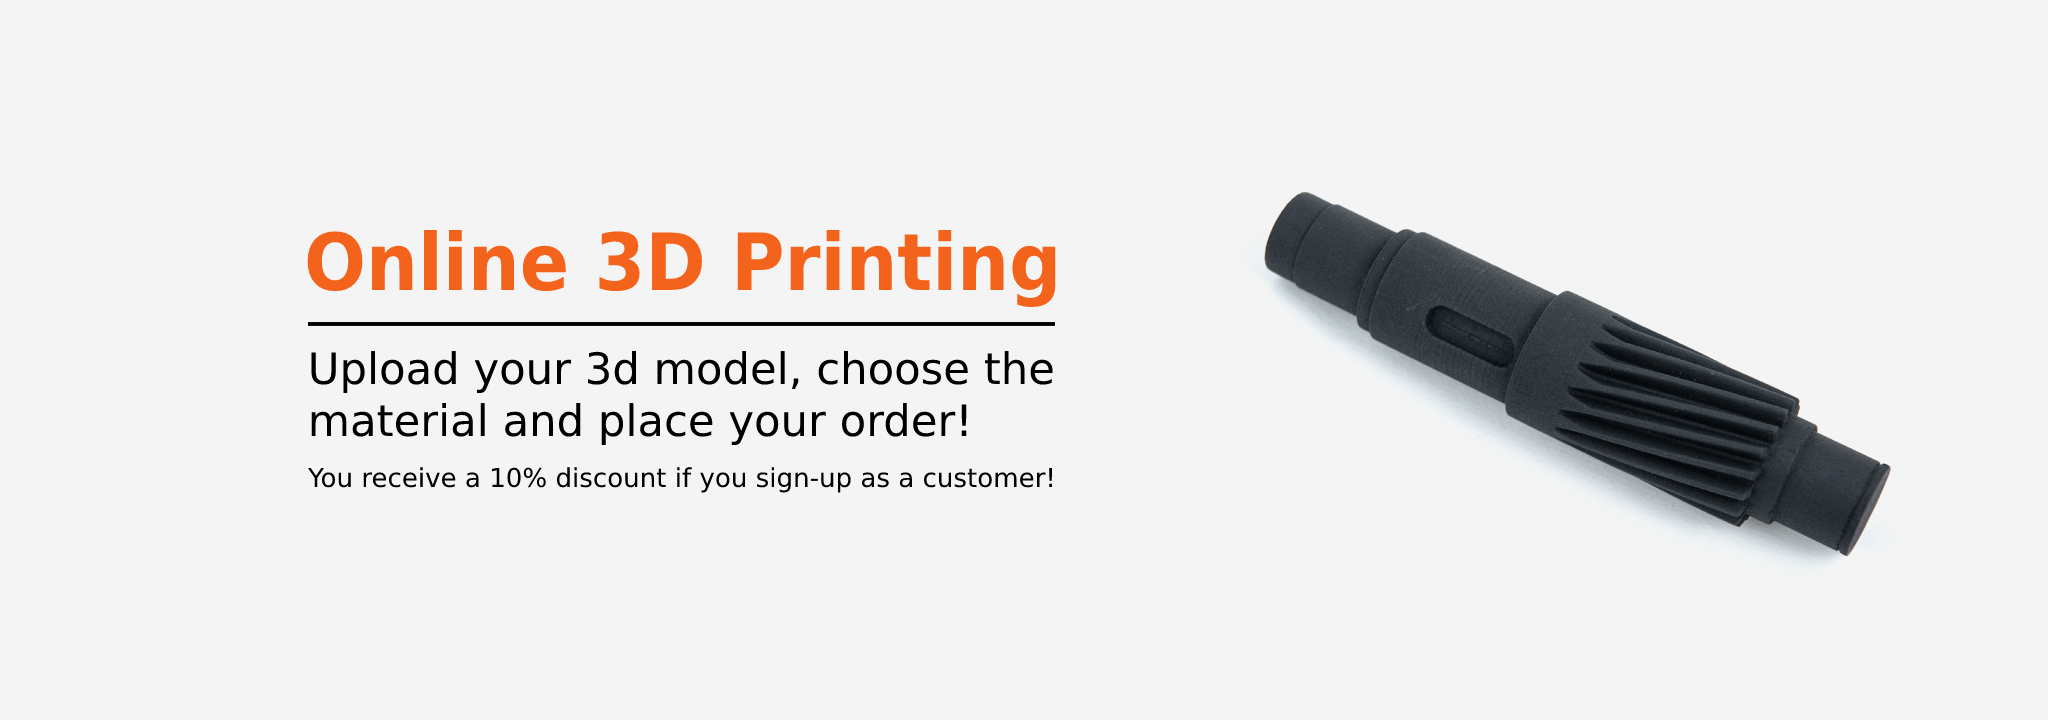 Online 3D Printing